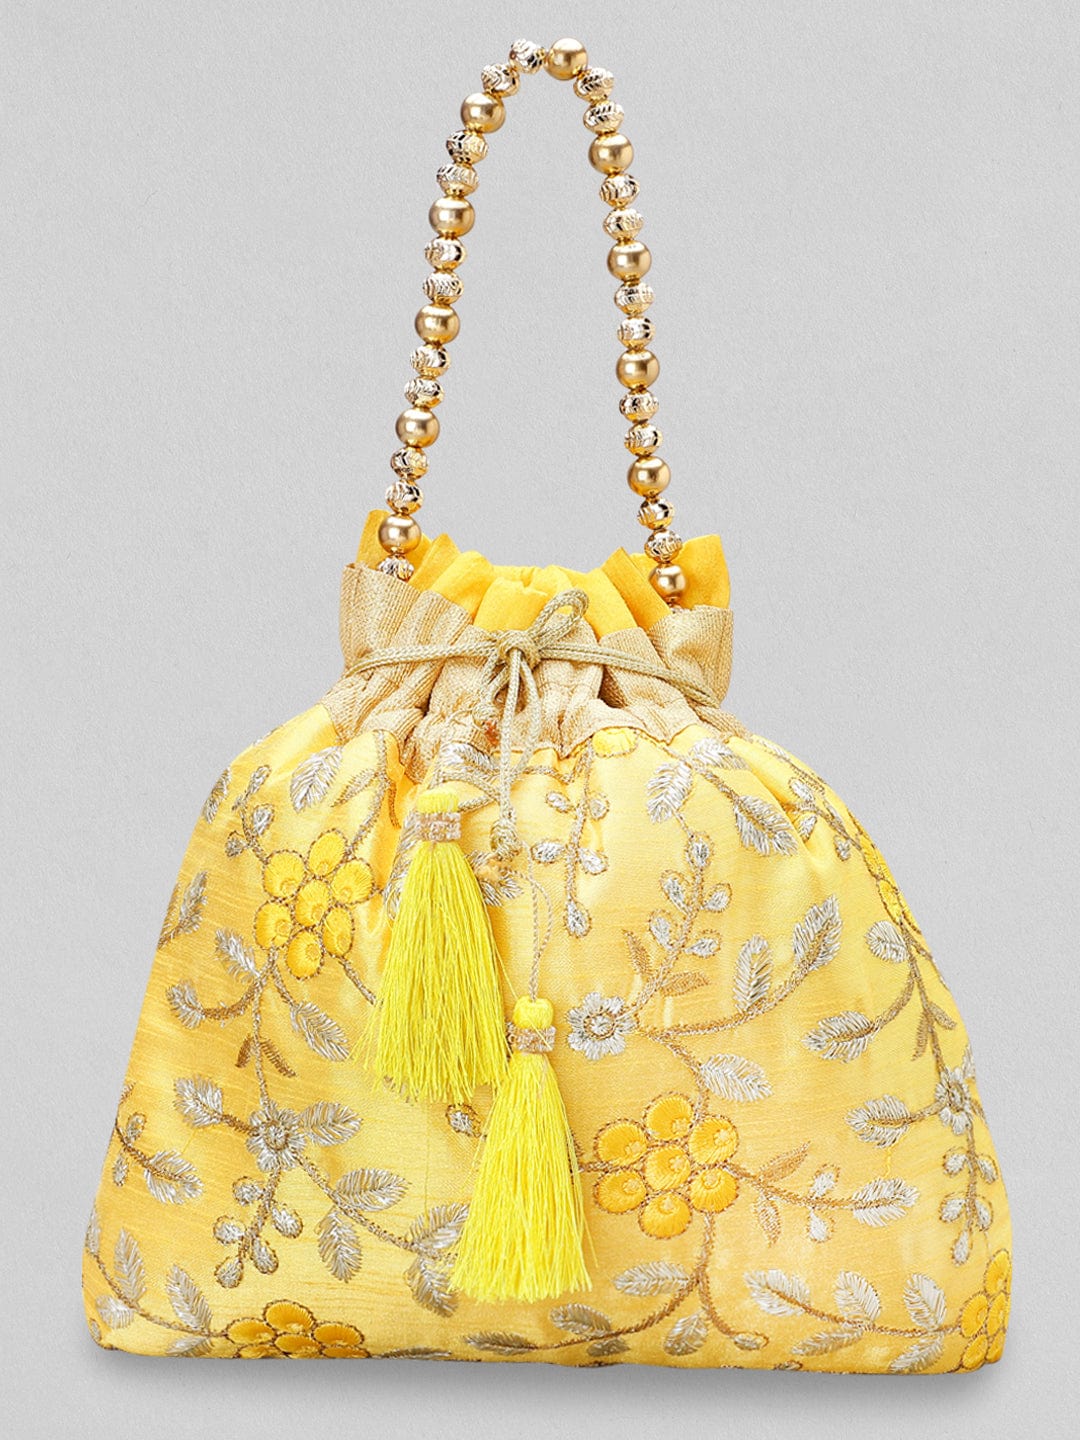 Abelardo De Moda Yellow Maria Leather Shoulder Bag